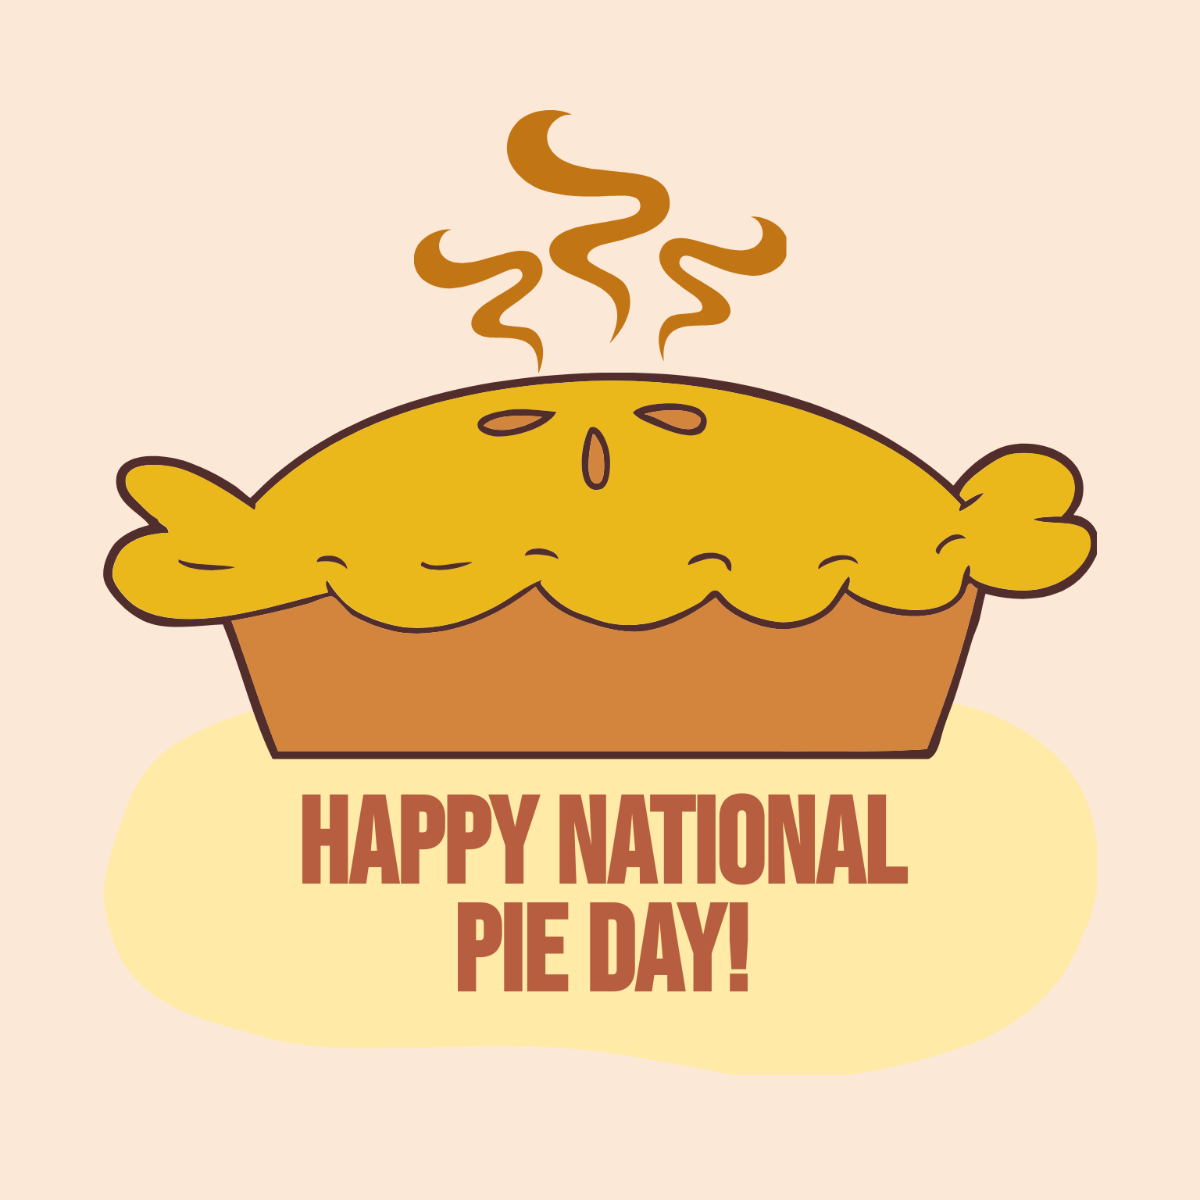 Happy National Pie Day Illustration